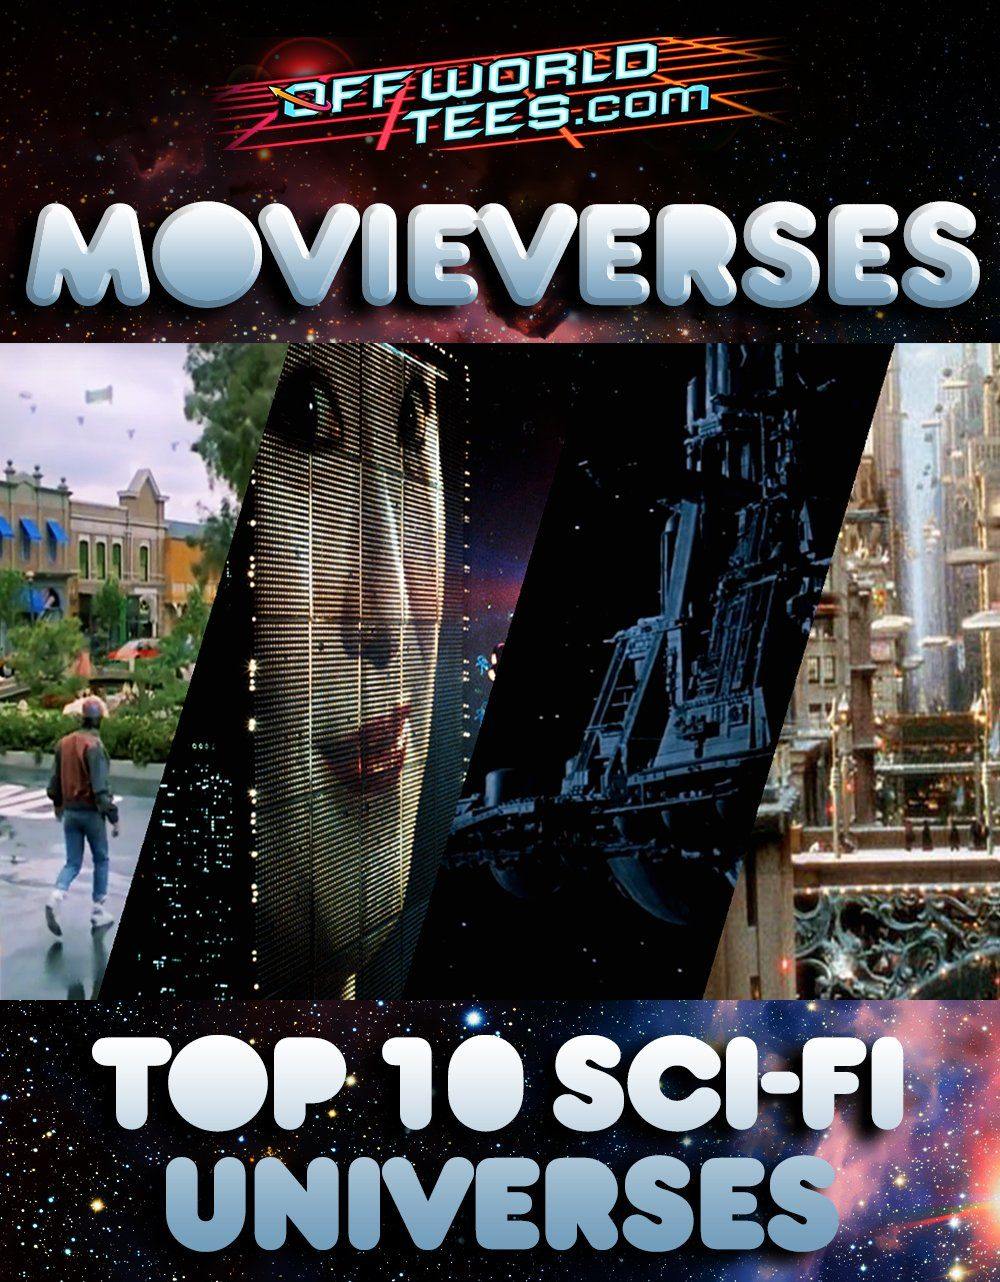 Movieverses - The Top 10 Sci-Fi Universes